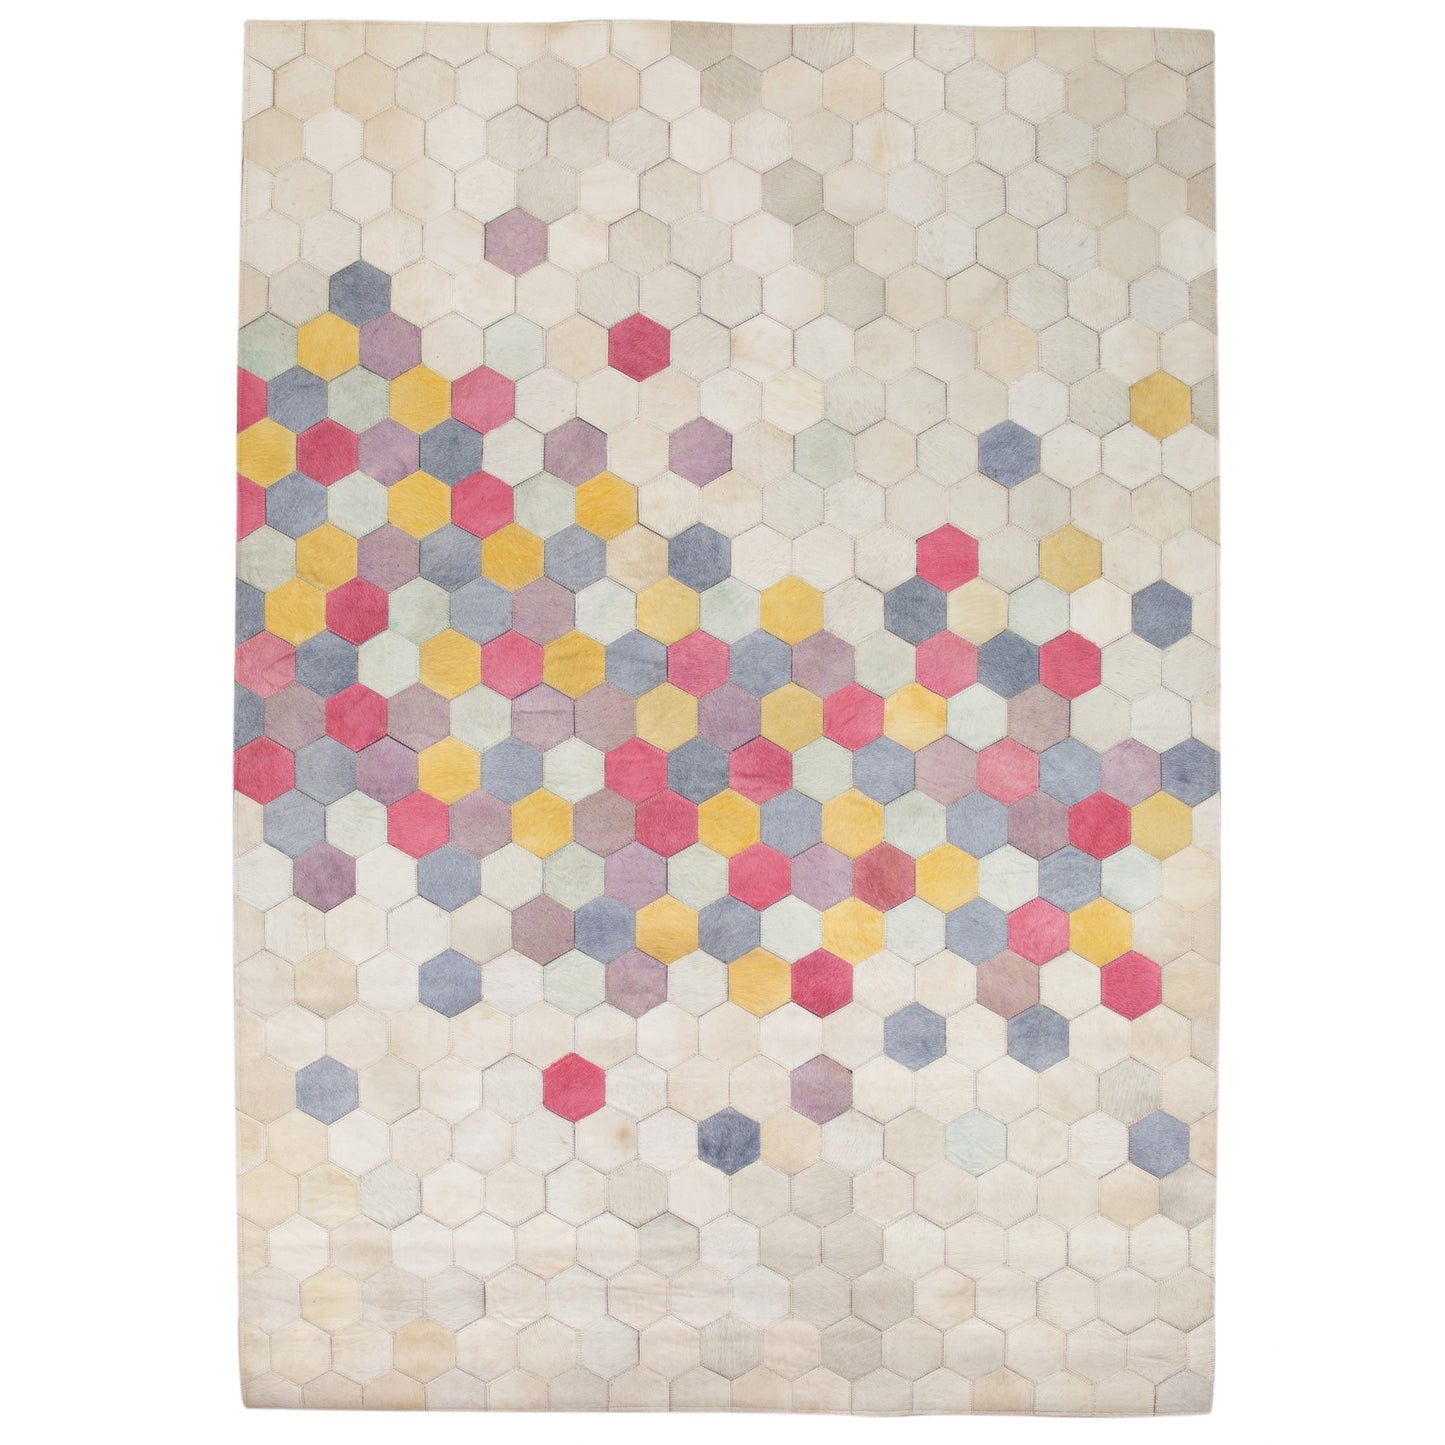 Corbit multi coloured hexagonal patches leather rug